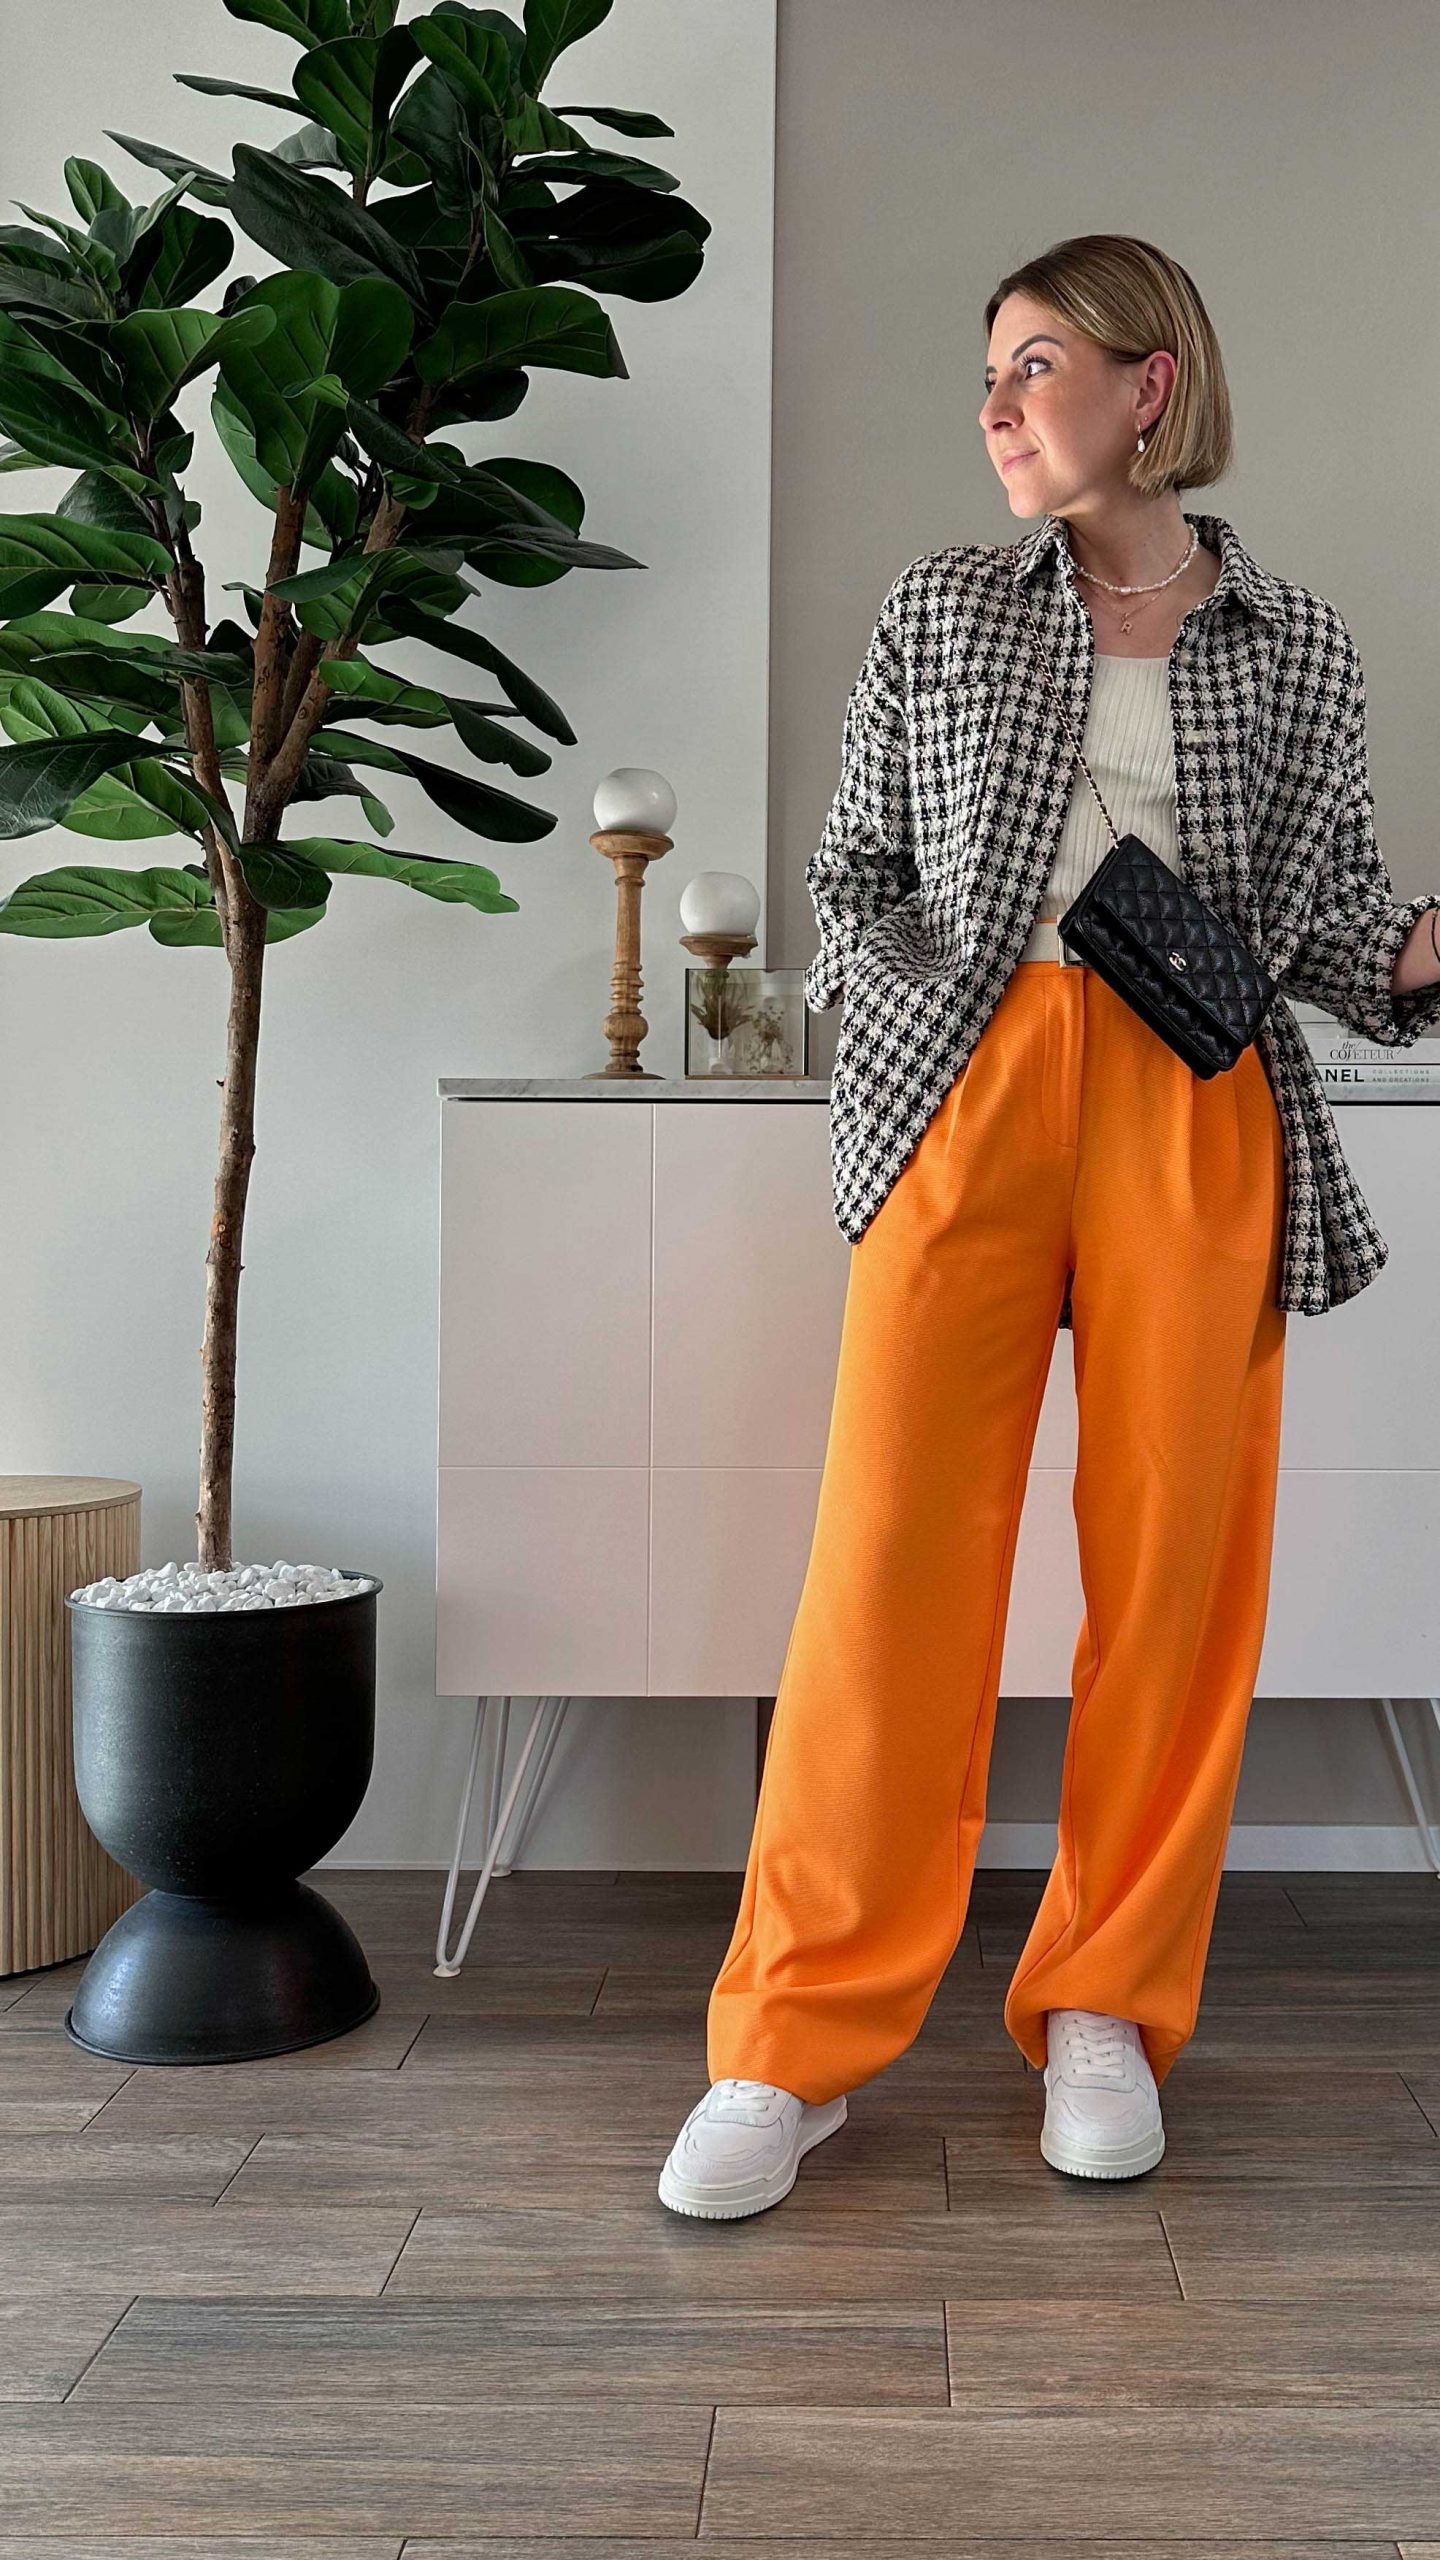 Basic-Casual Frühlingsoutfit mit oranger Palazzohose, weißen Copenhagen Sneakers und Jacke in Tweed-Optik. Mehr Frühlingstrends auf whoismocca.com